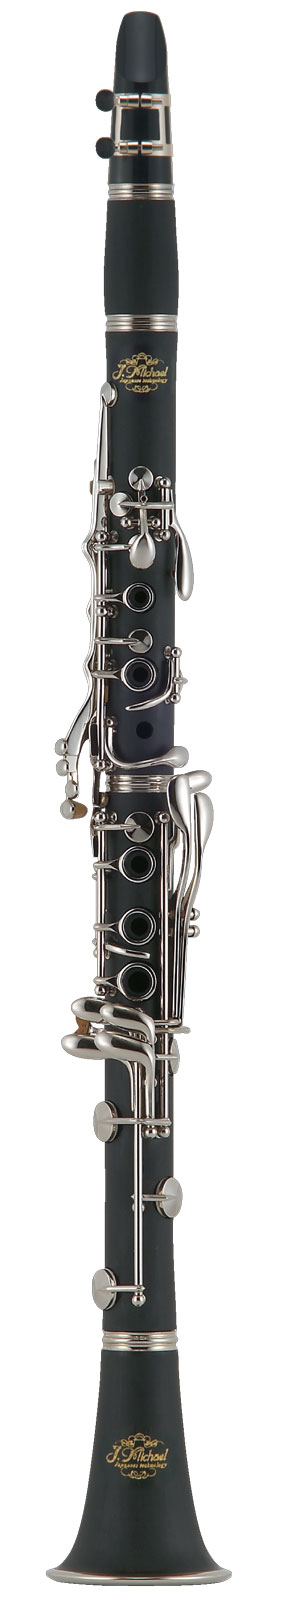 J.MICHAEL CL-350 Clarinet